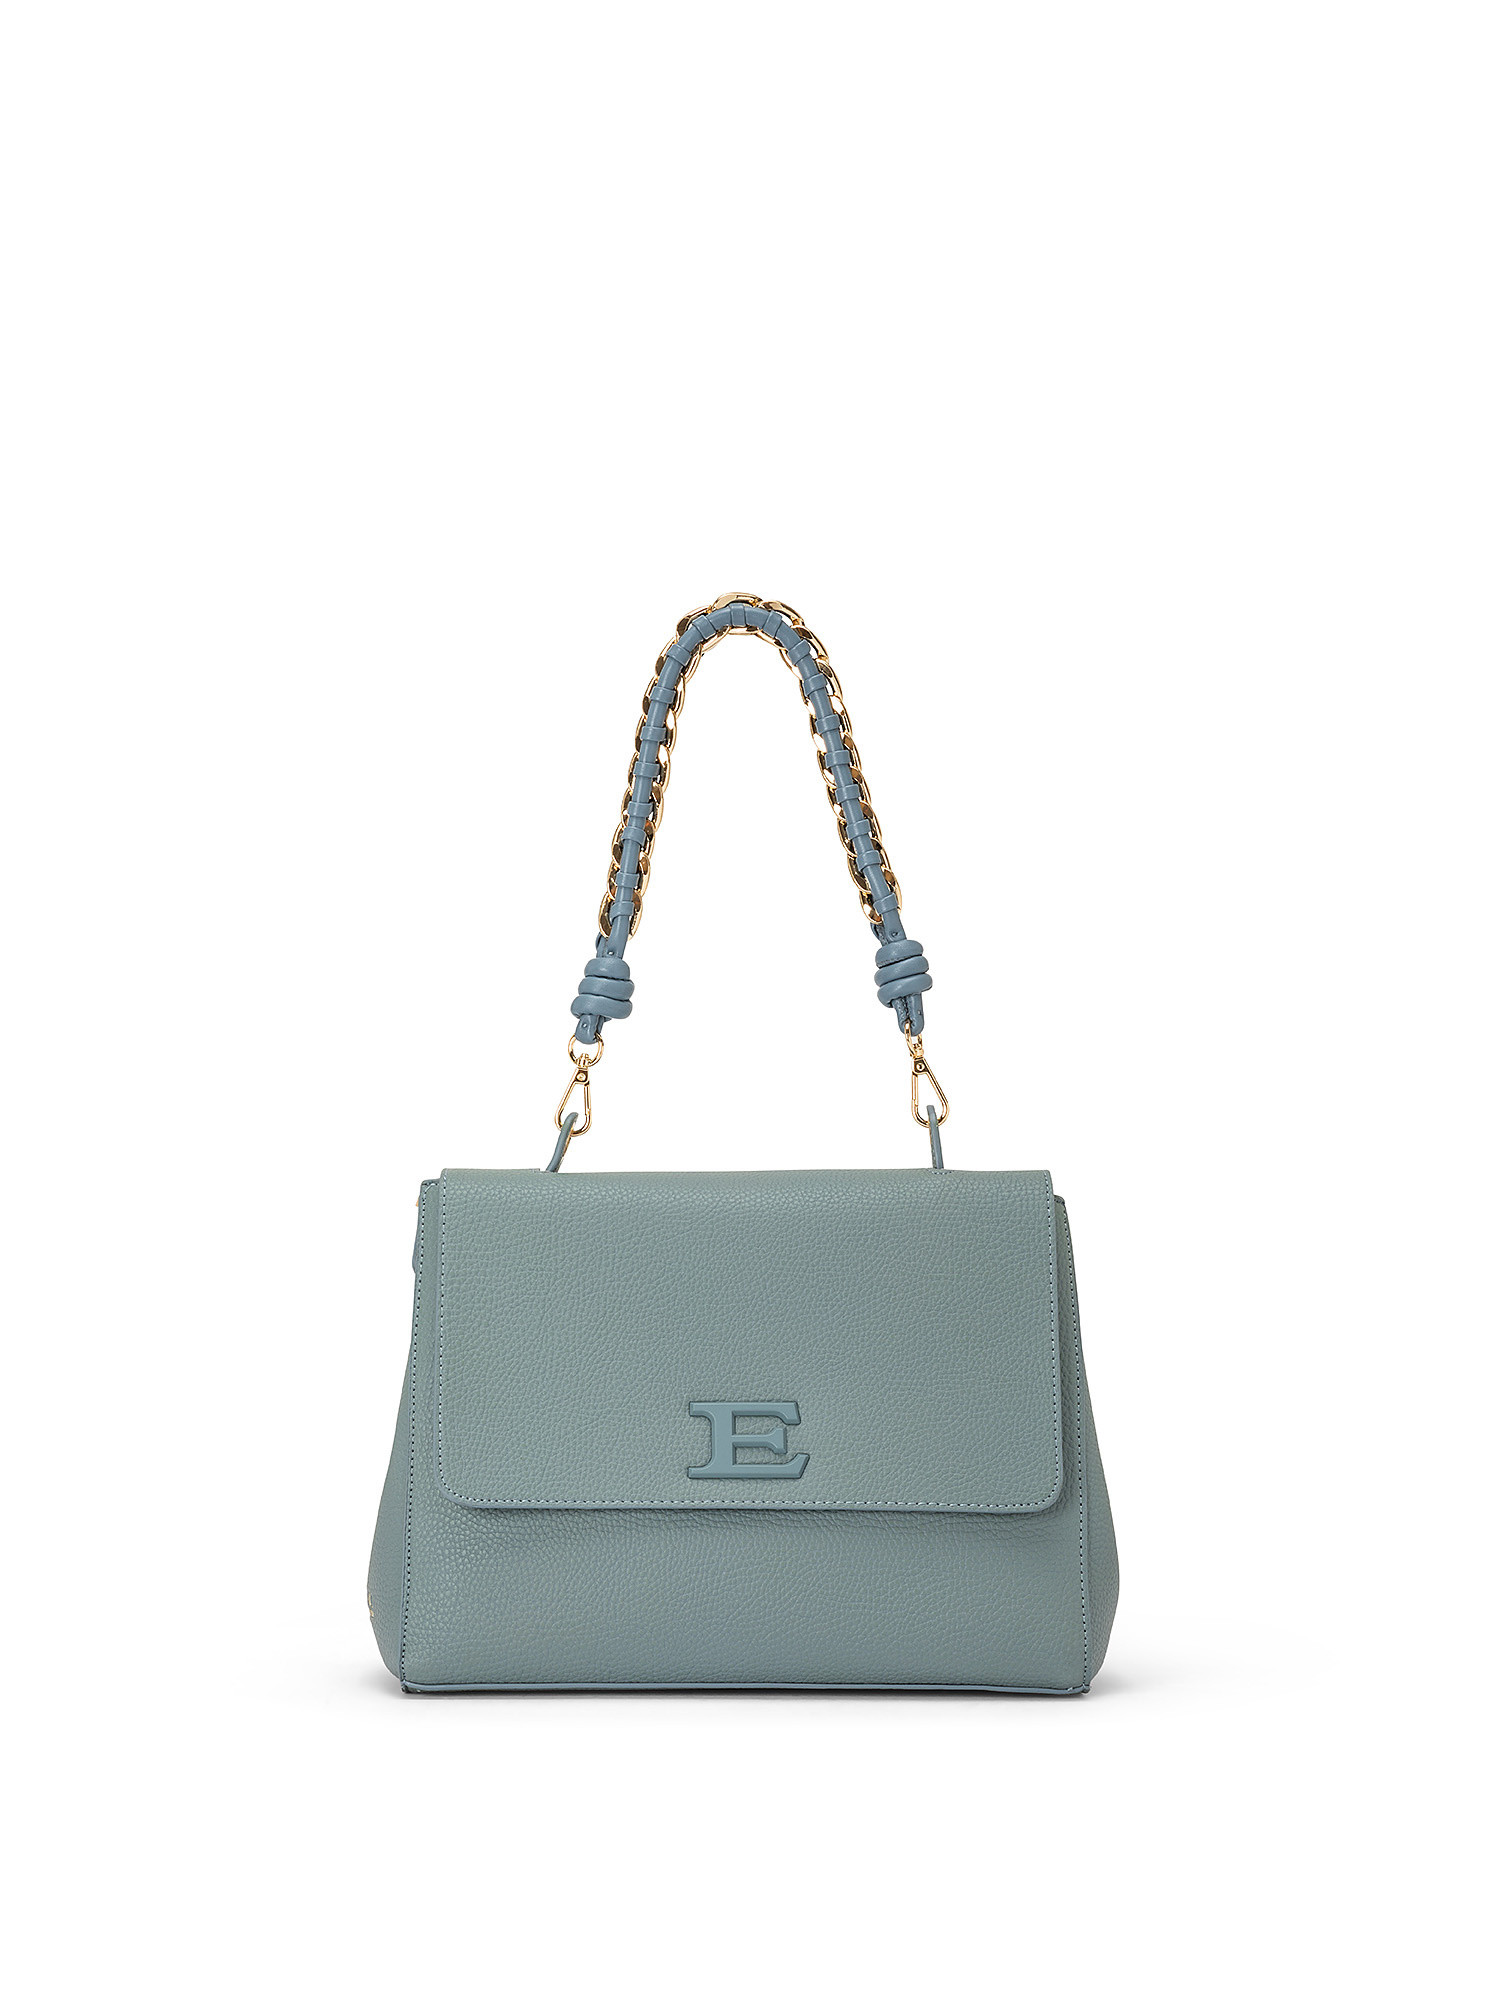 Small Flap Eba bag, Powder blue, large image number 0